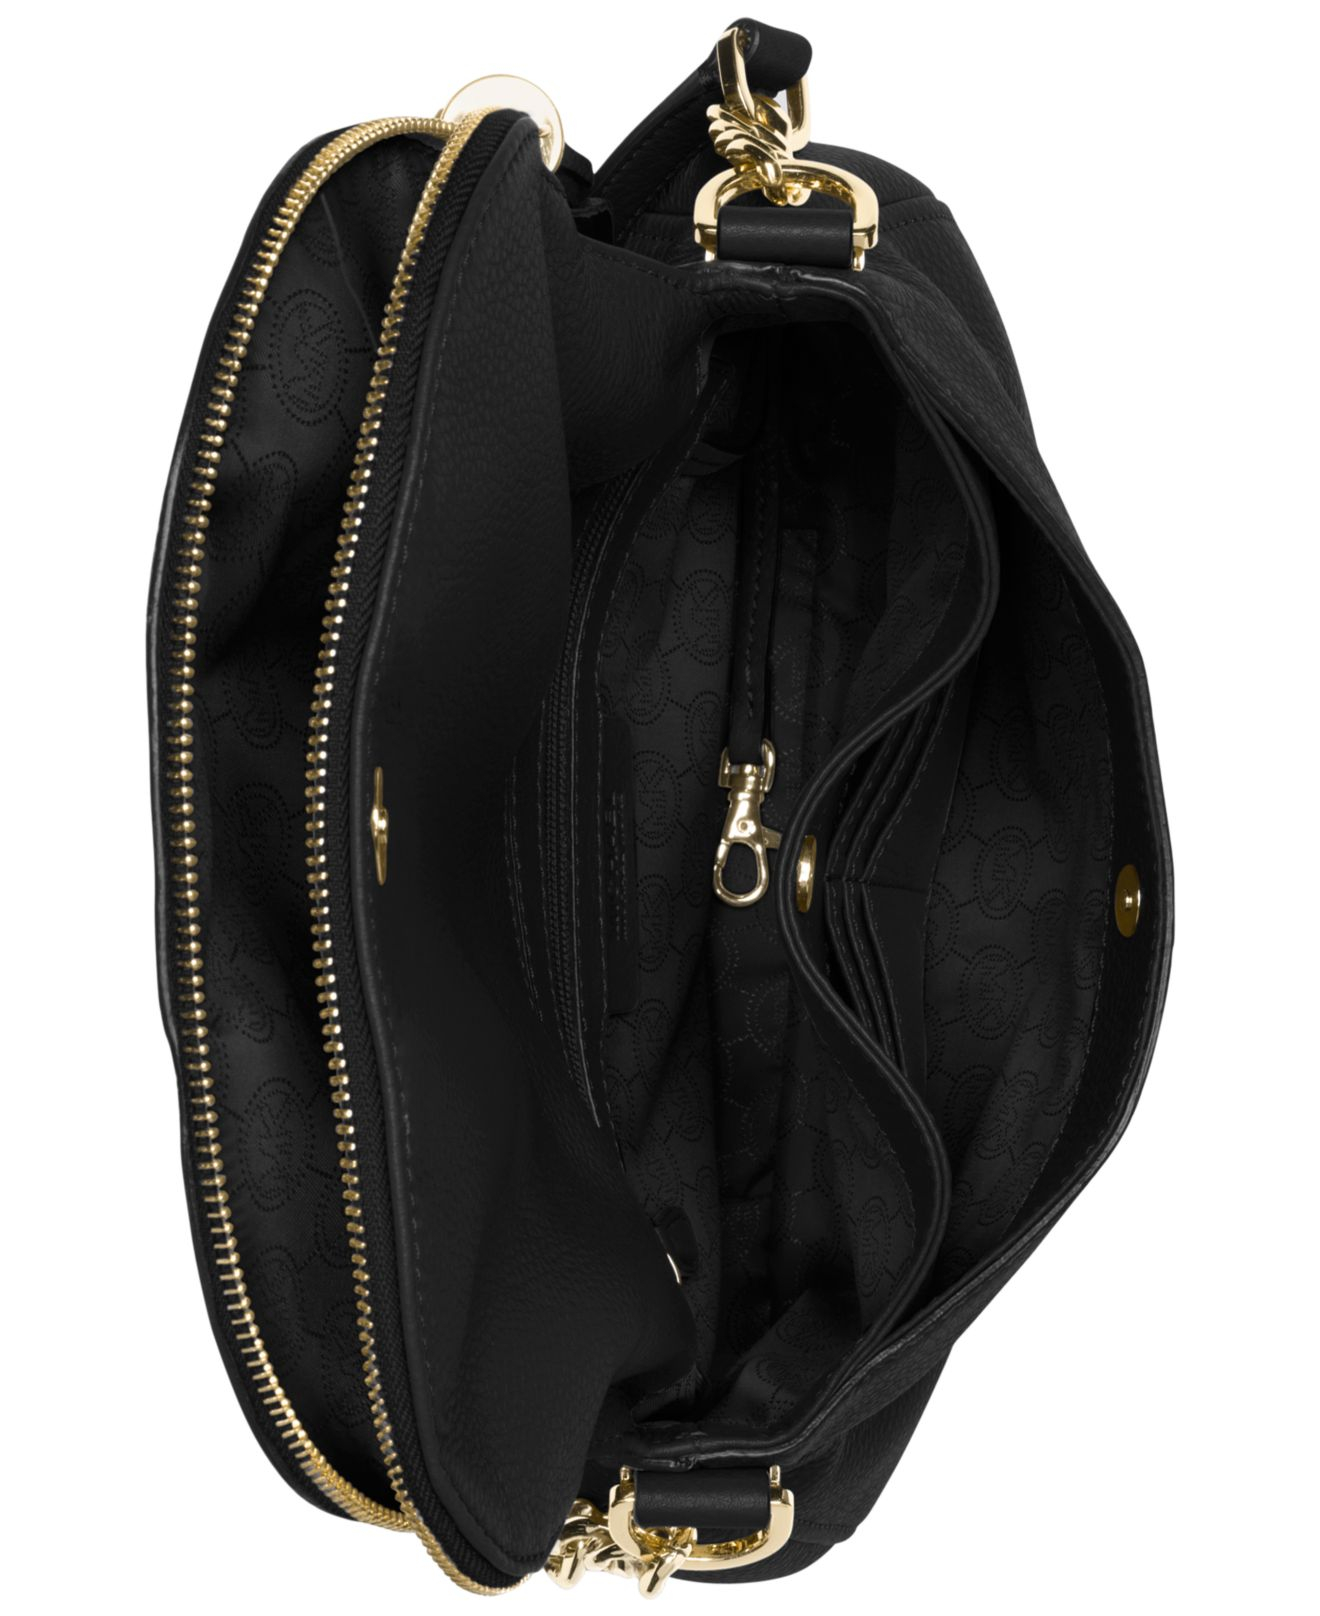 Michael Kors Michael Bedford Medium Tassle Convertible Shoulder Bag in Black/Gold (Black) - Lyst